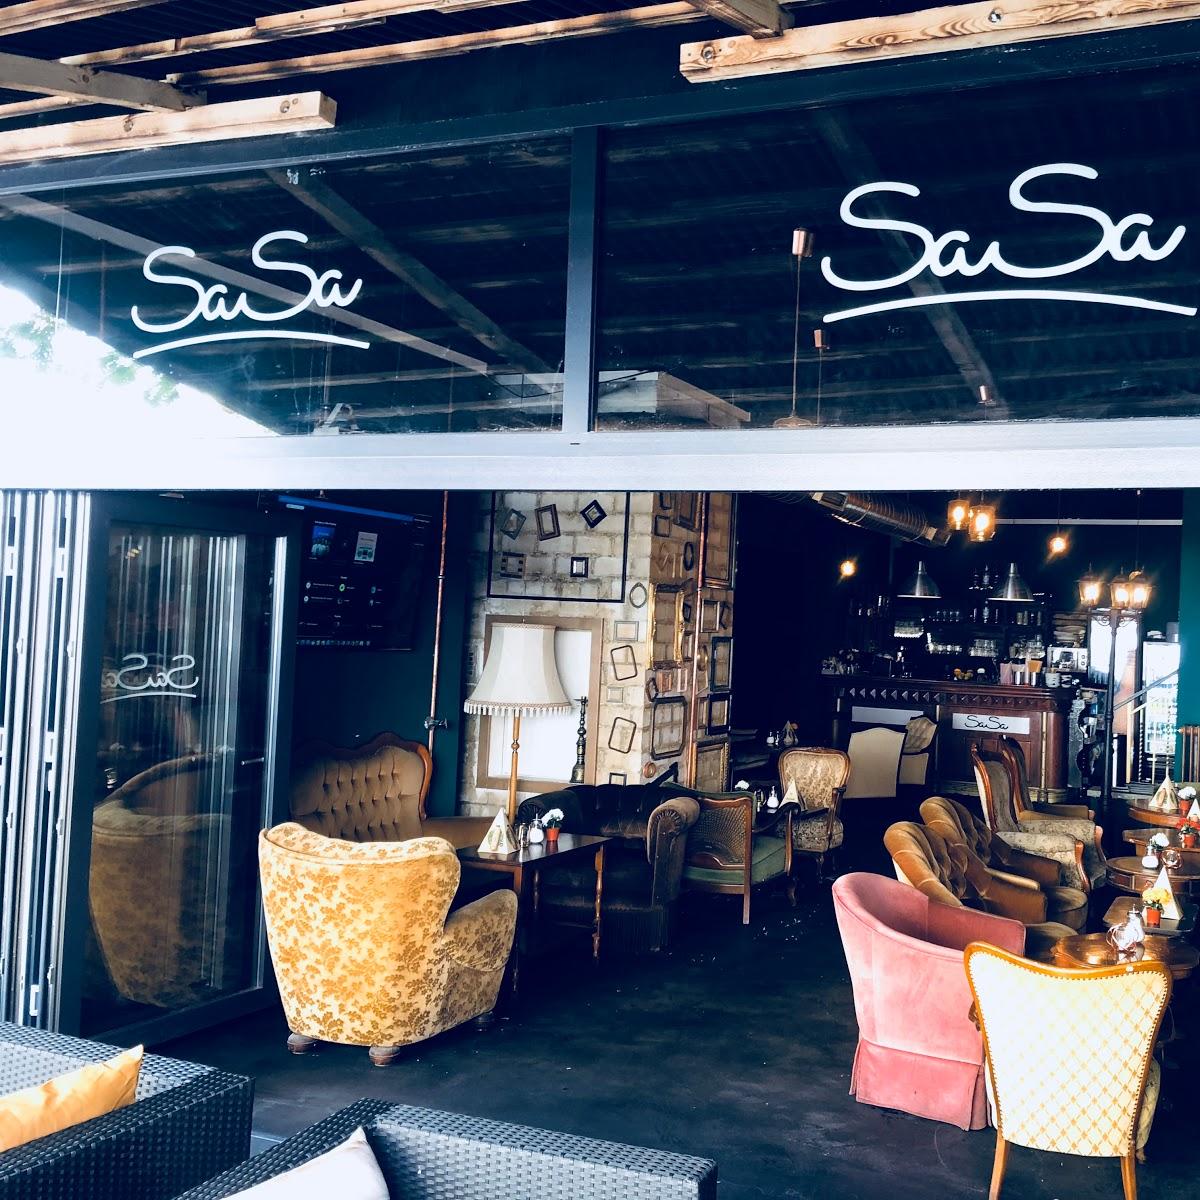 Restaurant "SaSa Lounge Neu" in Berlin